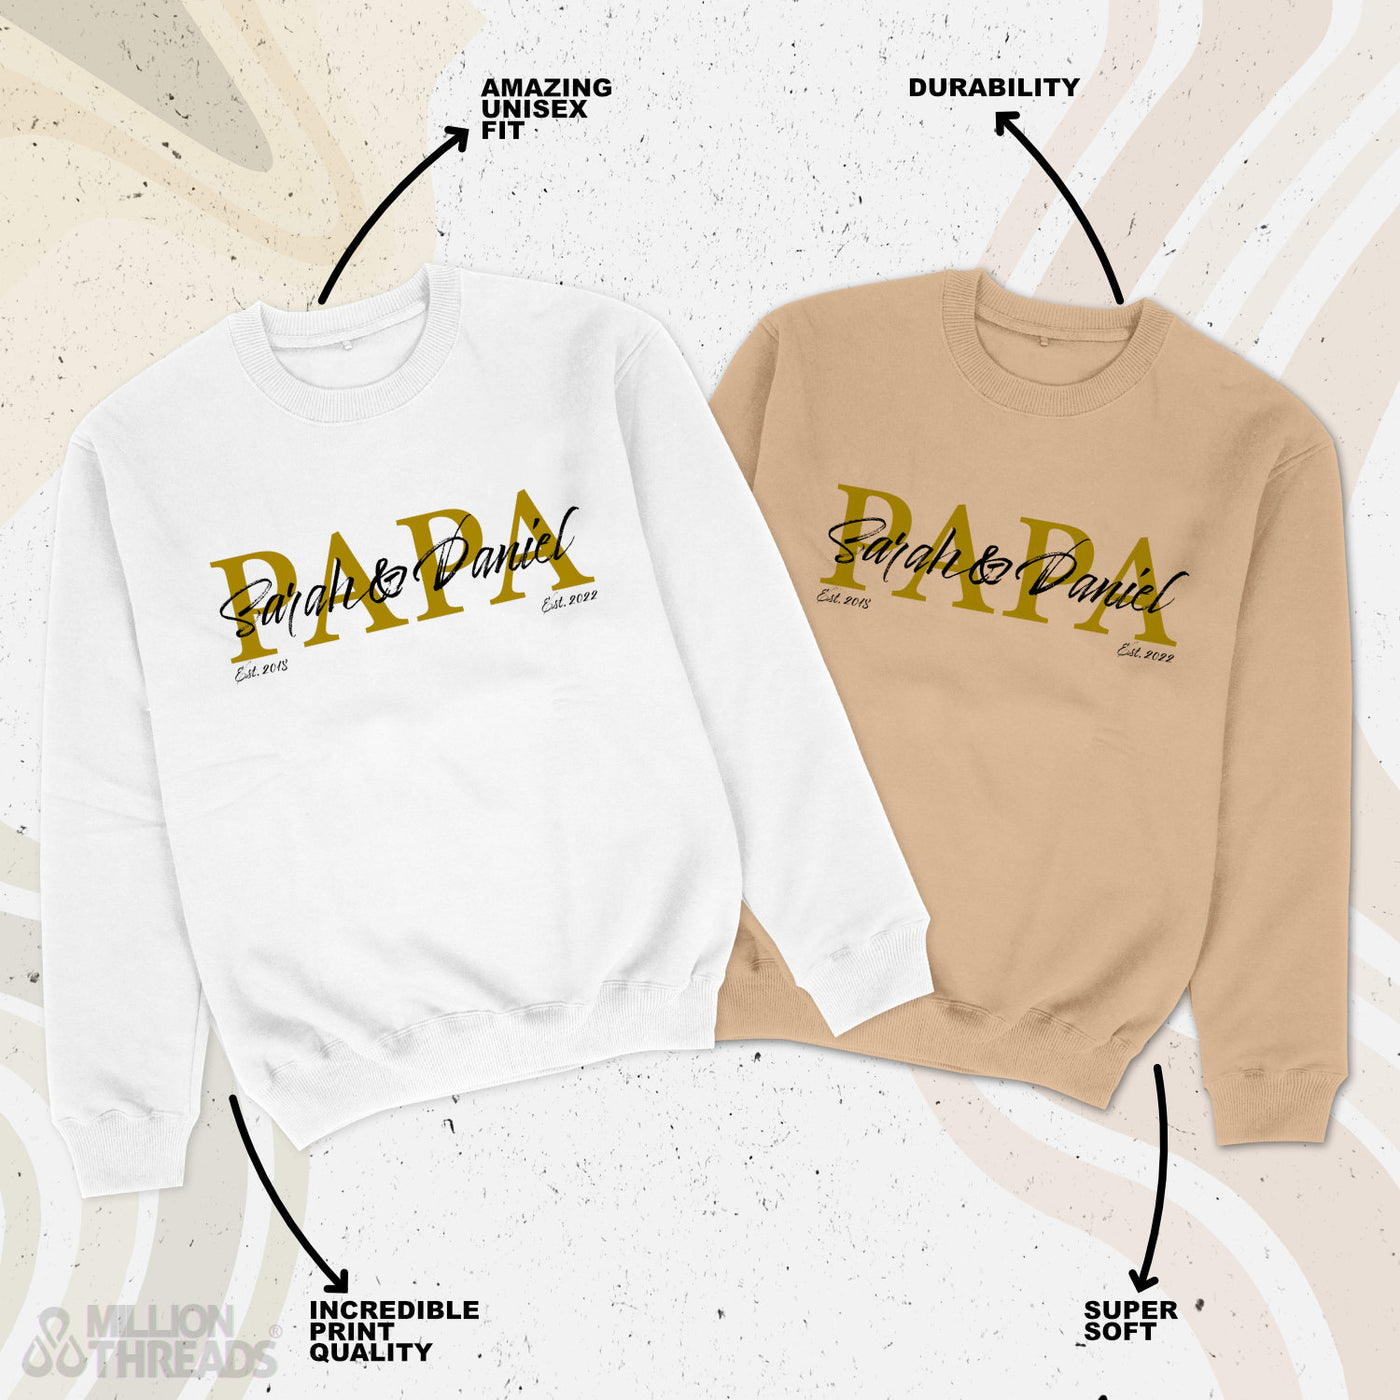 Papa Sweatshirt personalisiert Geschenk Vatertag Pullover für Papa Vatertagsgeschenk Wunschtext Familie Sweater Kindernamen Est Datum Papa